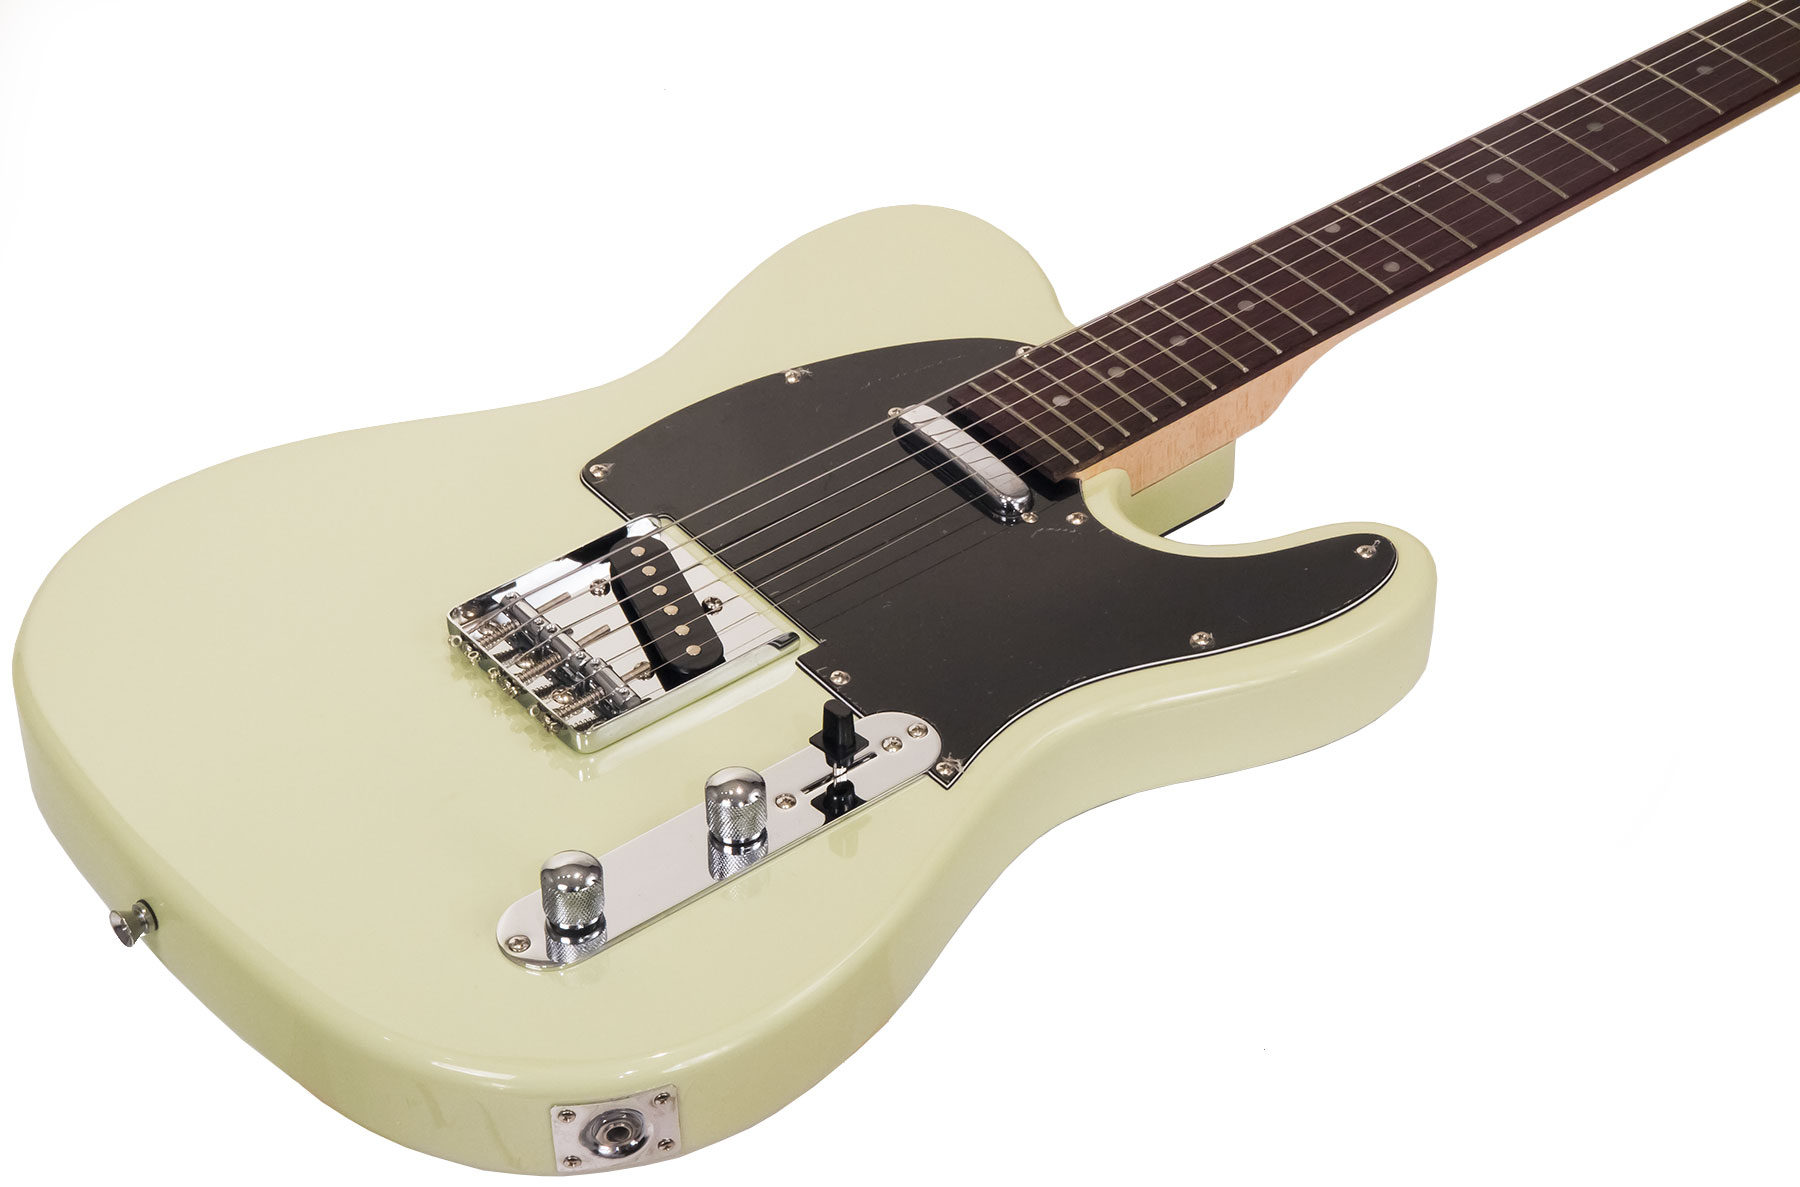 Eastone Tl70 Ss Ht Rw - Ivory - Tel shape electric guitar - Variation 1